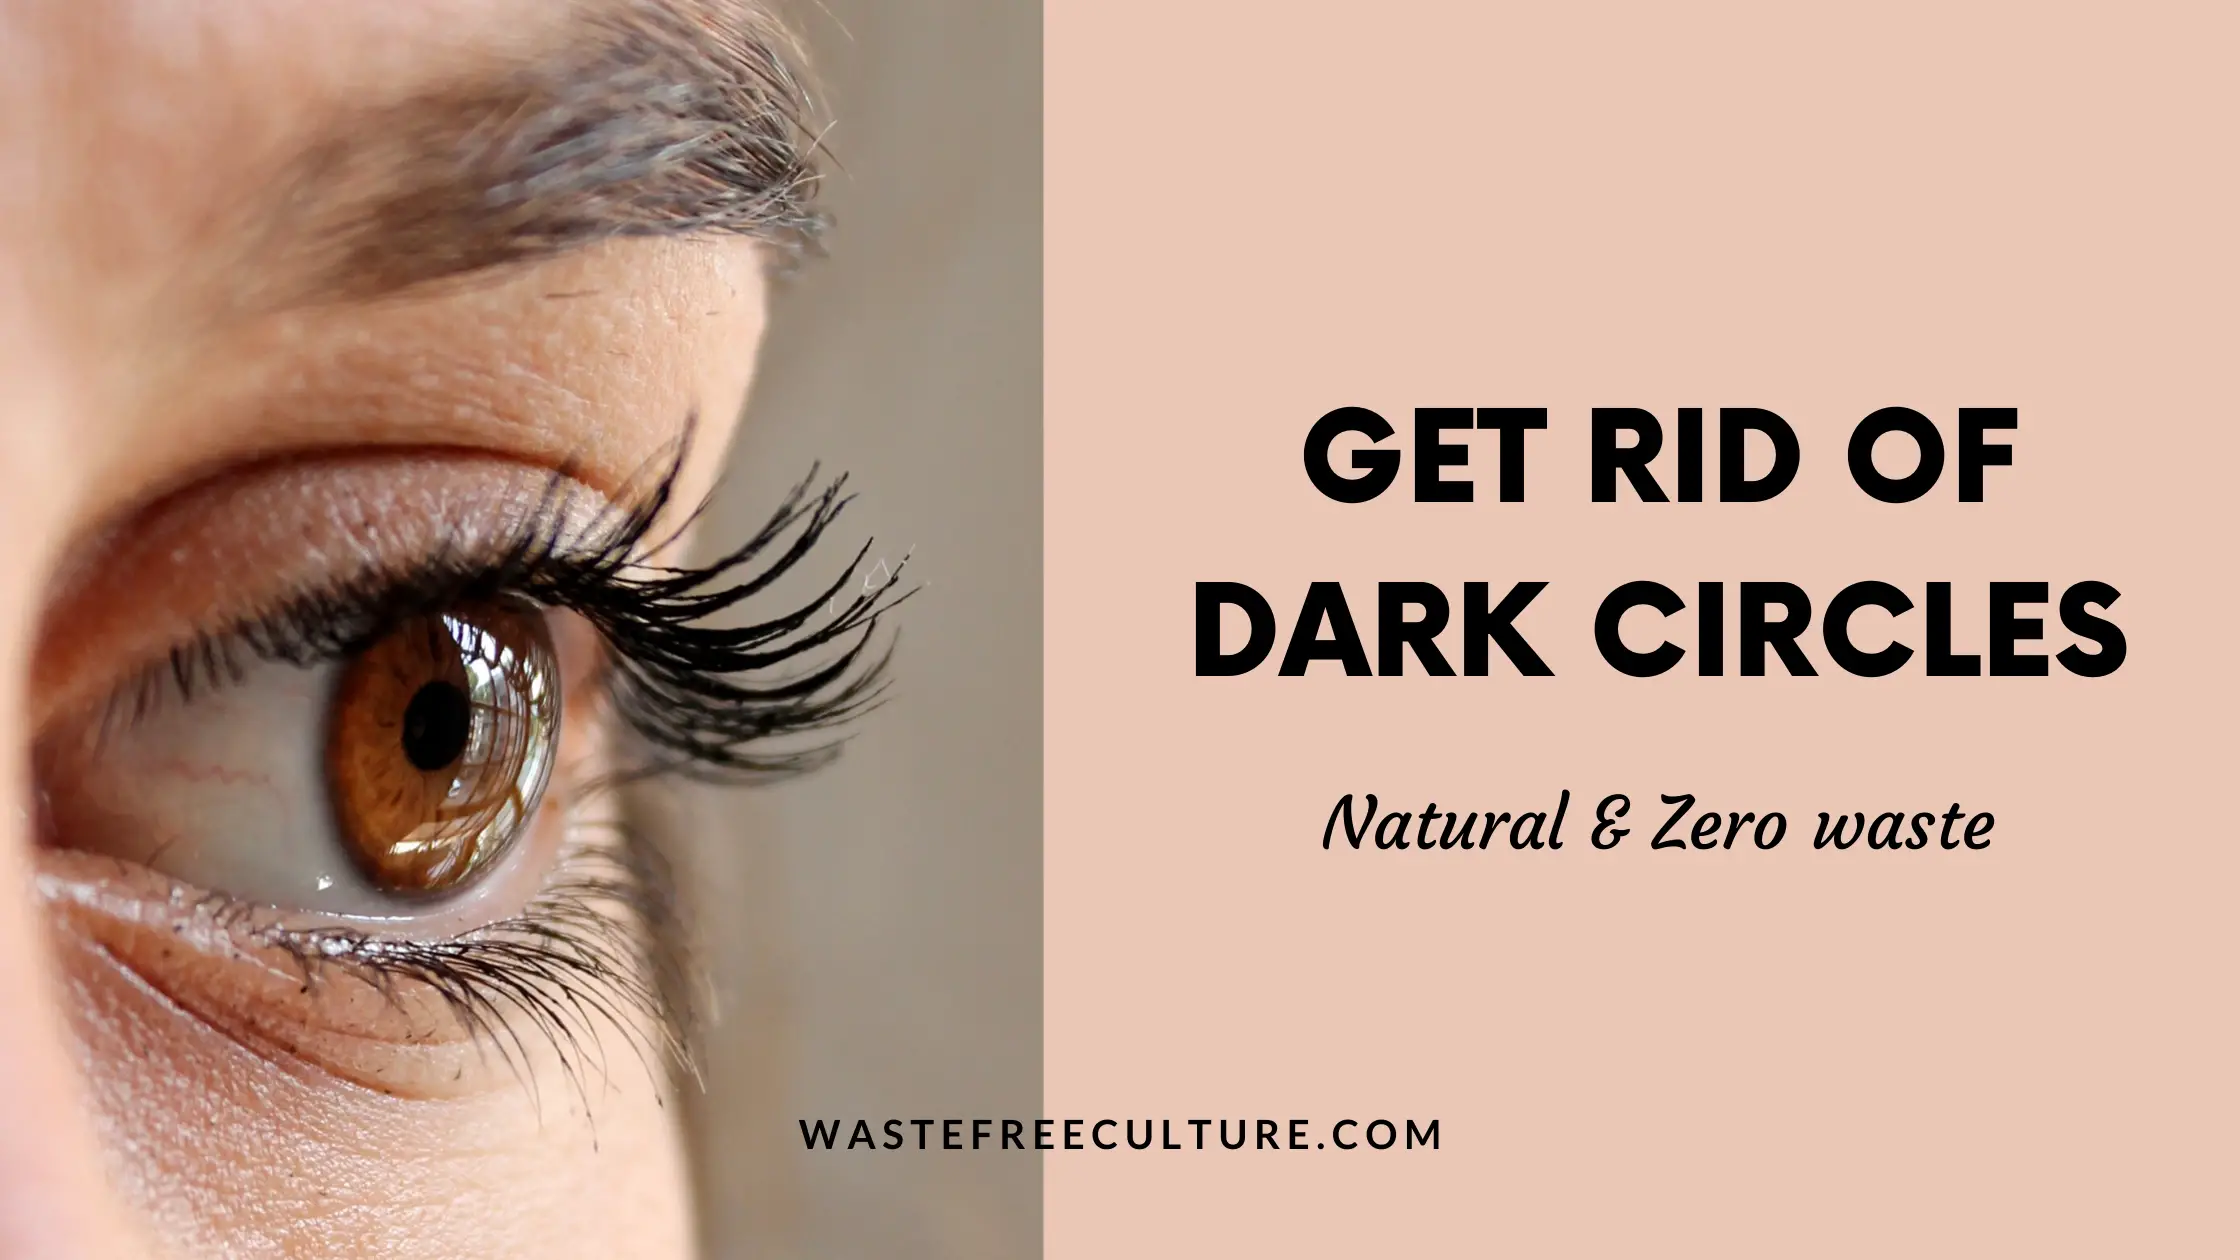 Get rid of Dark circles - natural & zero waste